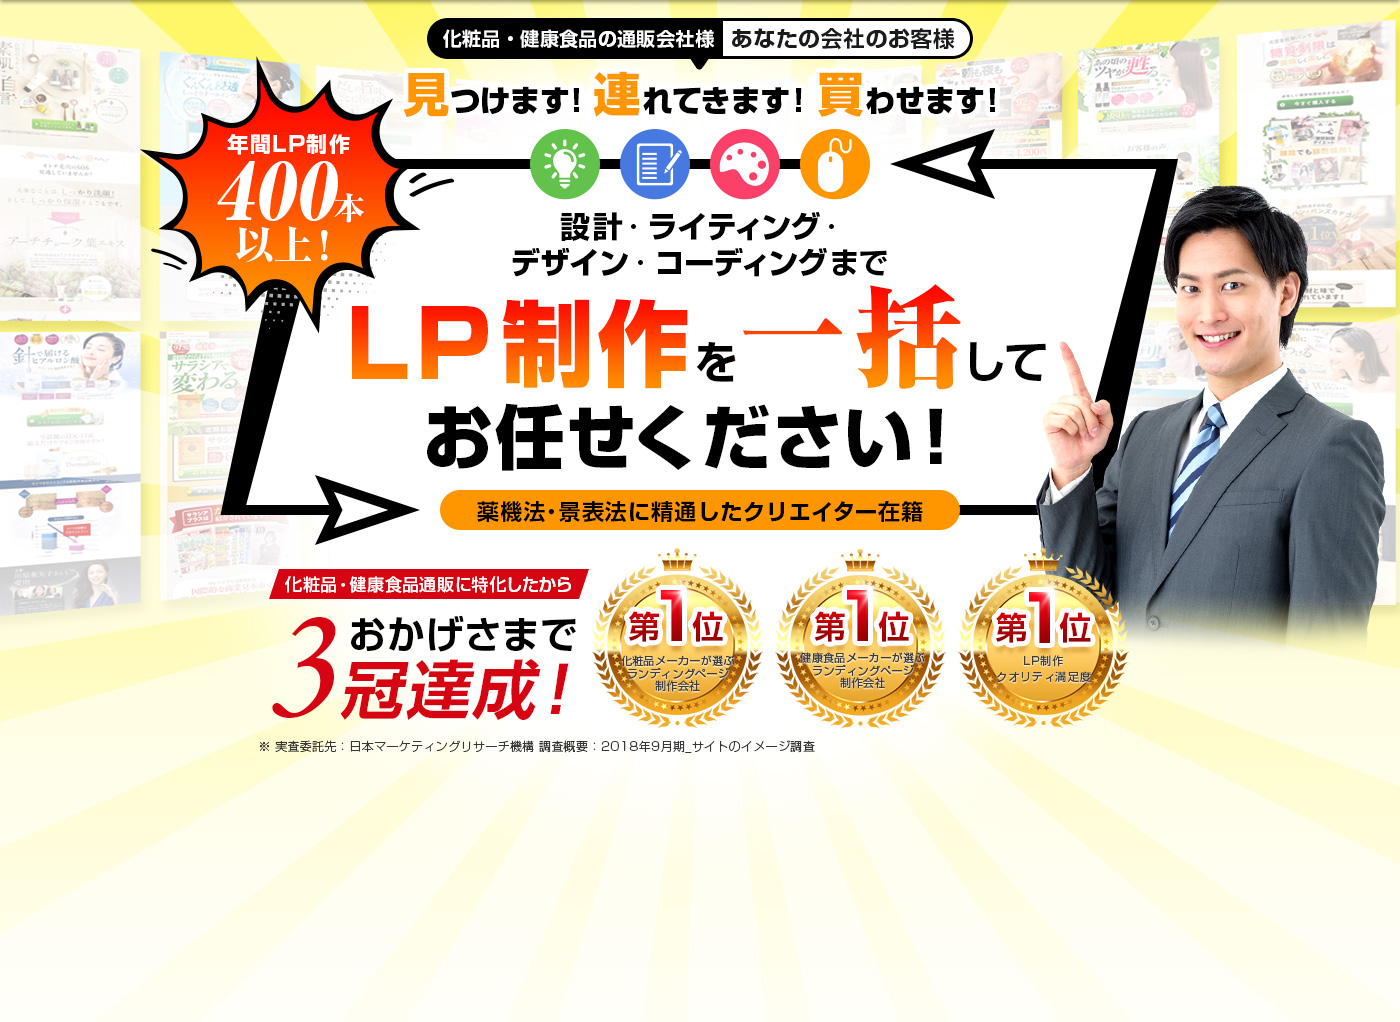 Lp ランディングページ 4 福岡 化粧品 健康食品通販に特化したweb制作のアドライズ